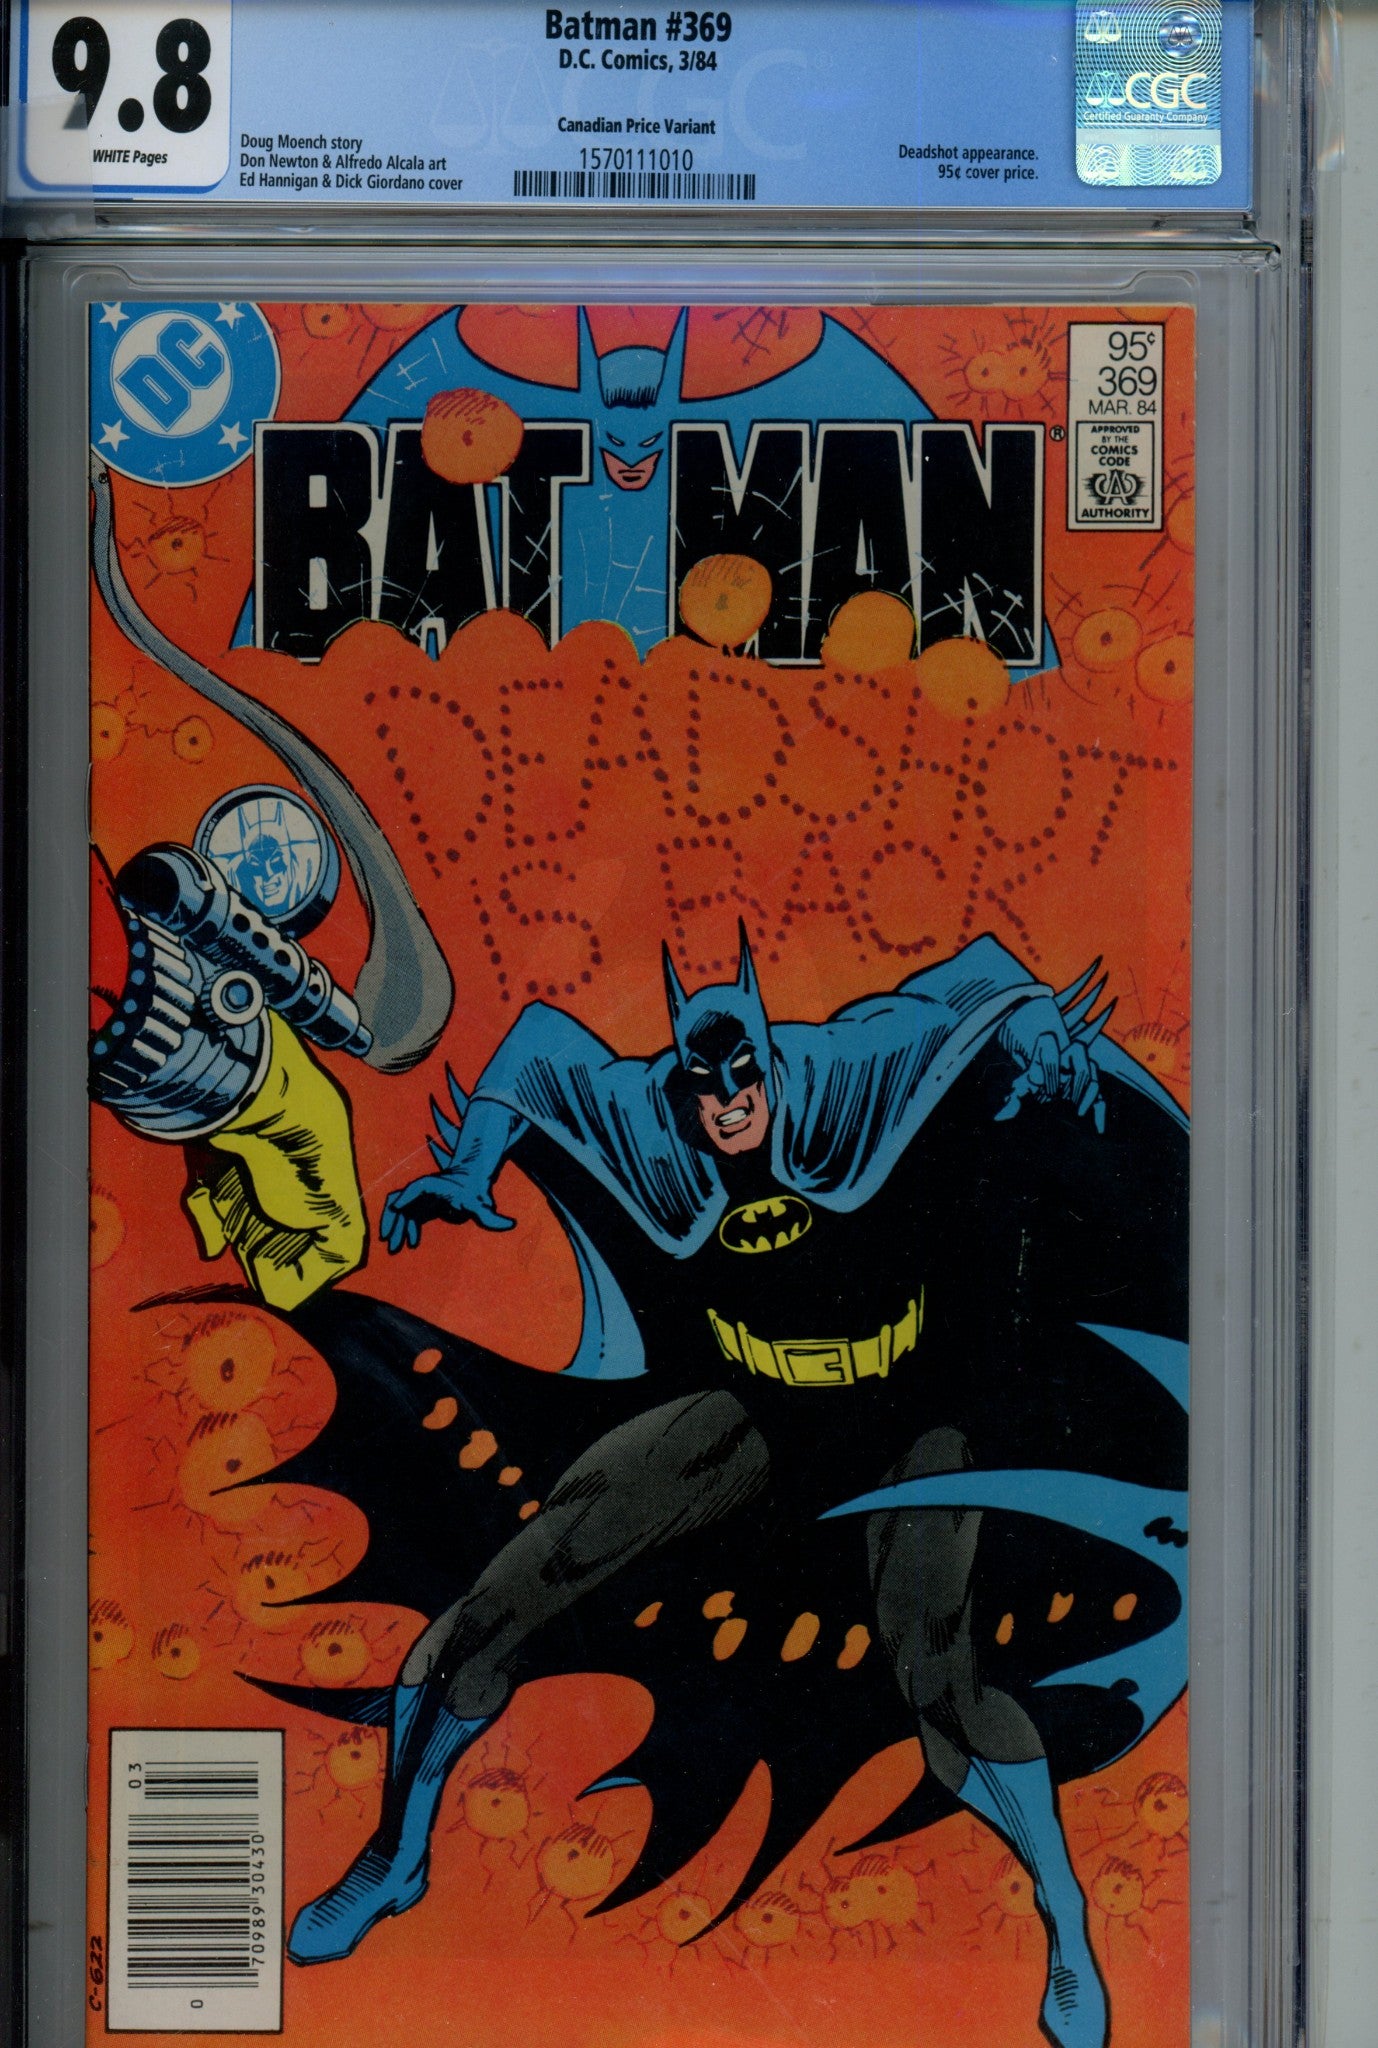 Batman Vol 1 369 Canadian Price Variant CGC 9.8 (1983)